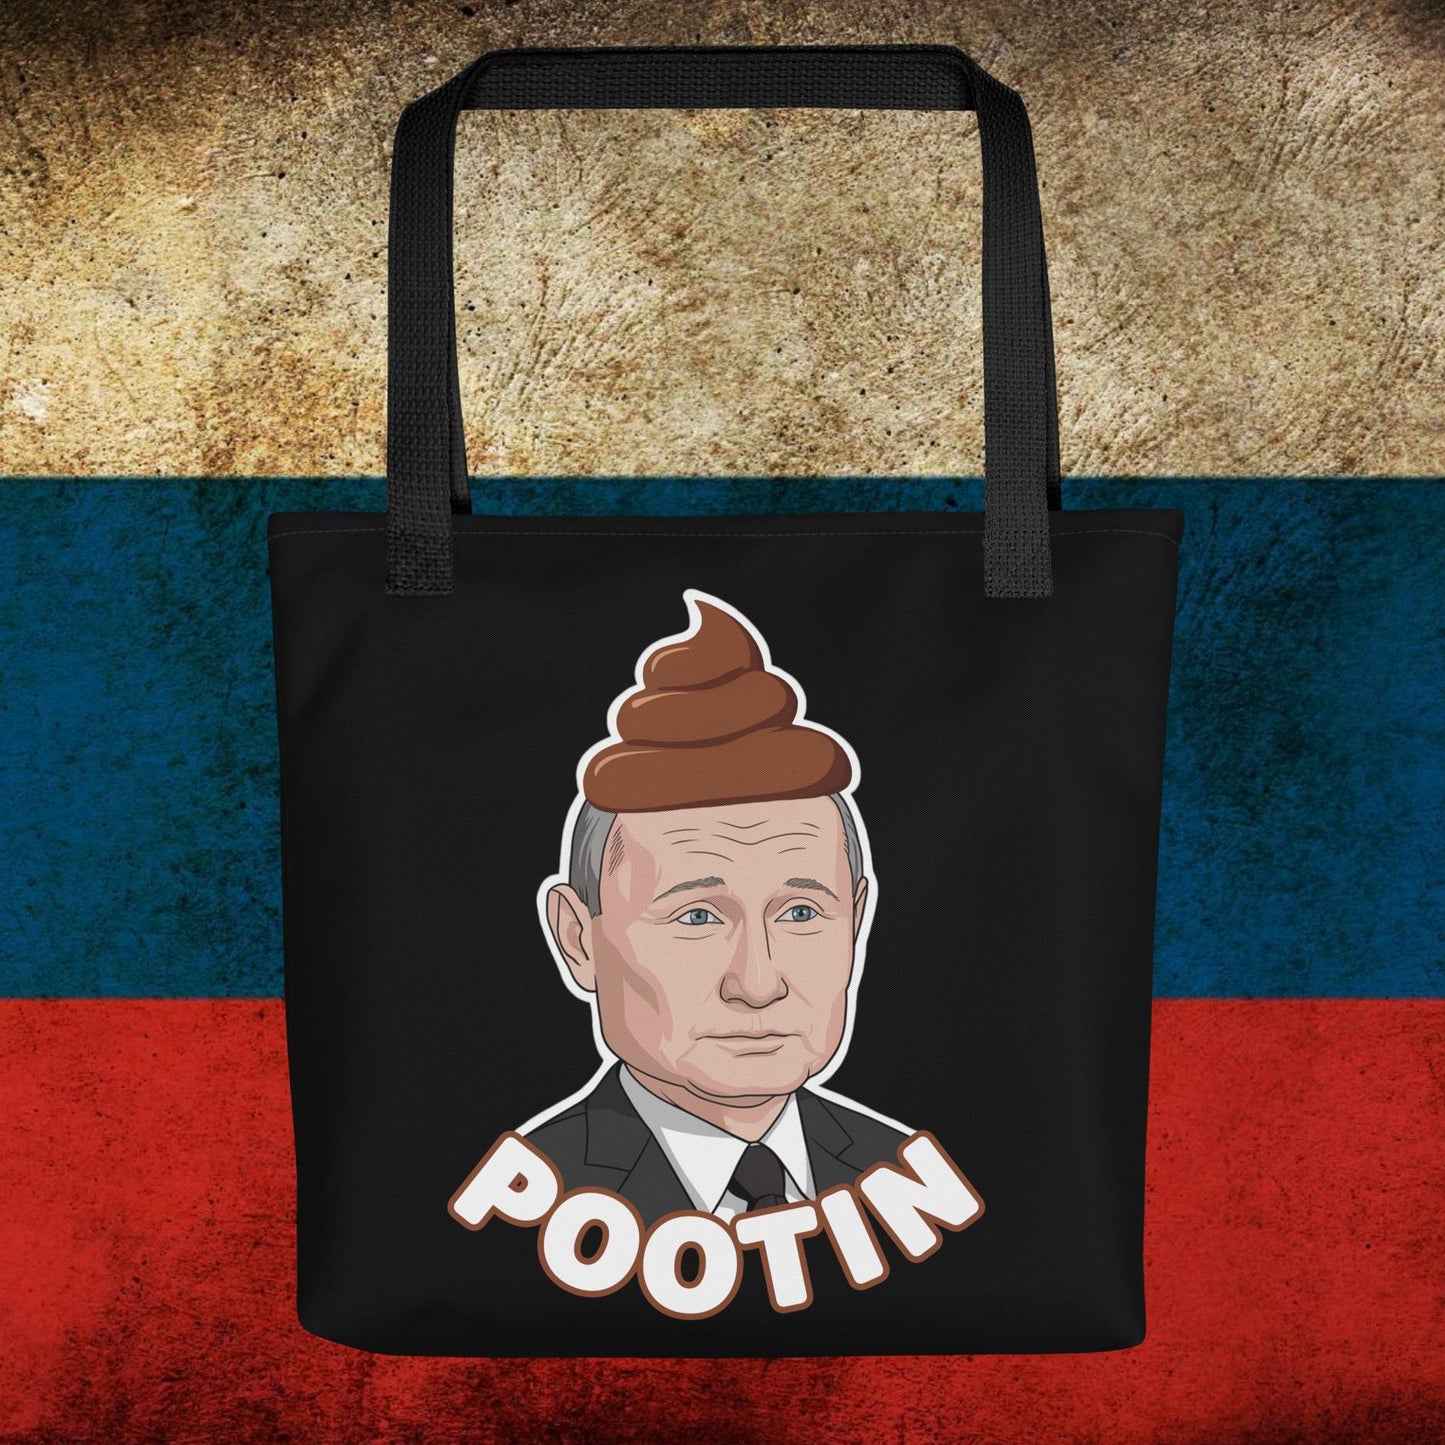 Pootin Funny Anti Vladimir Putin Tote bag Next Cult Brand